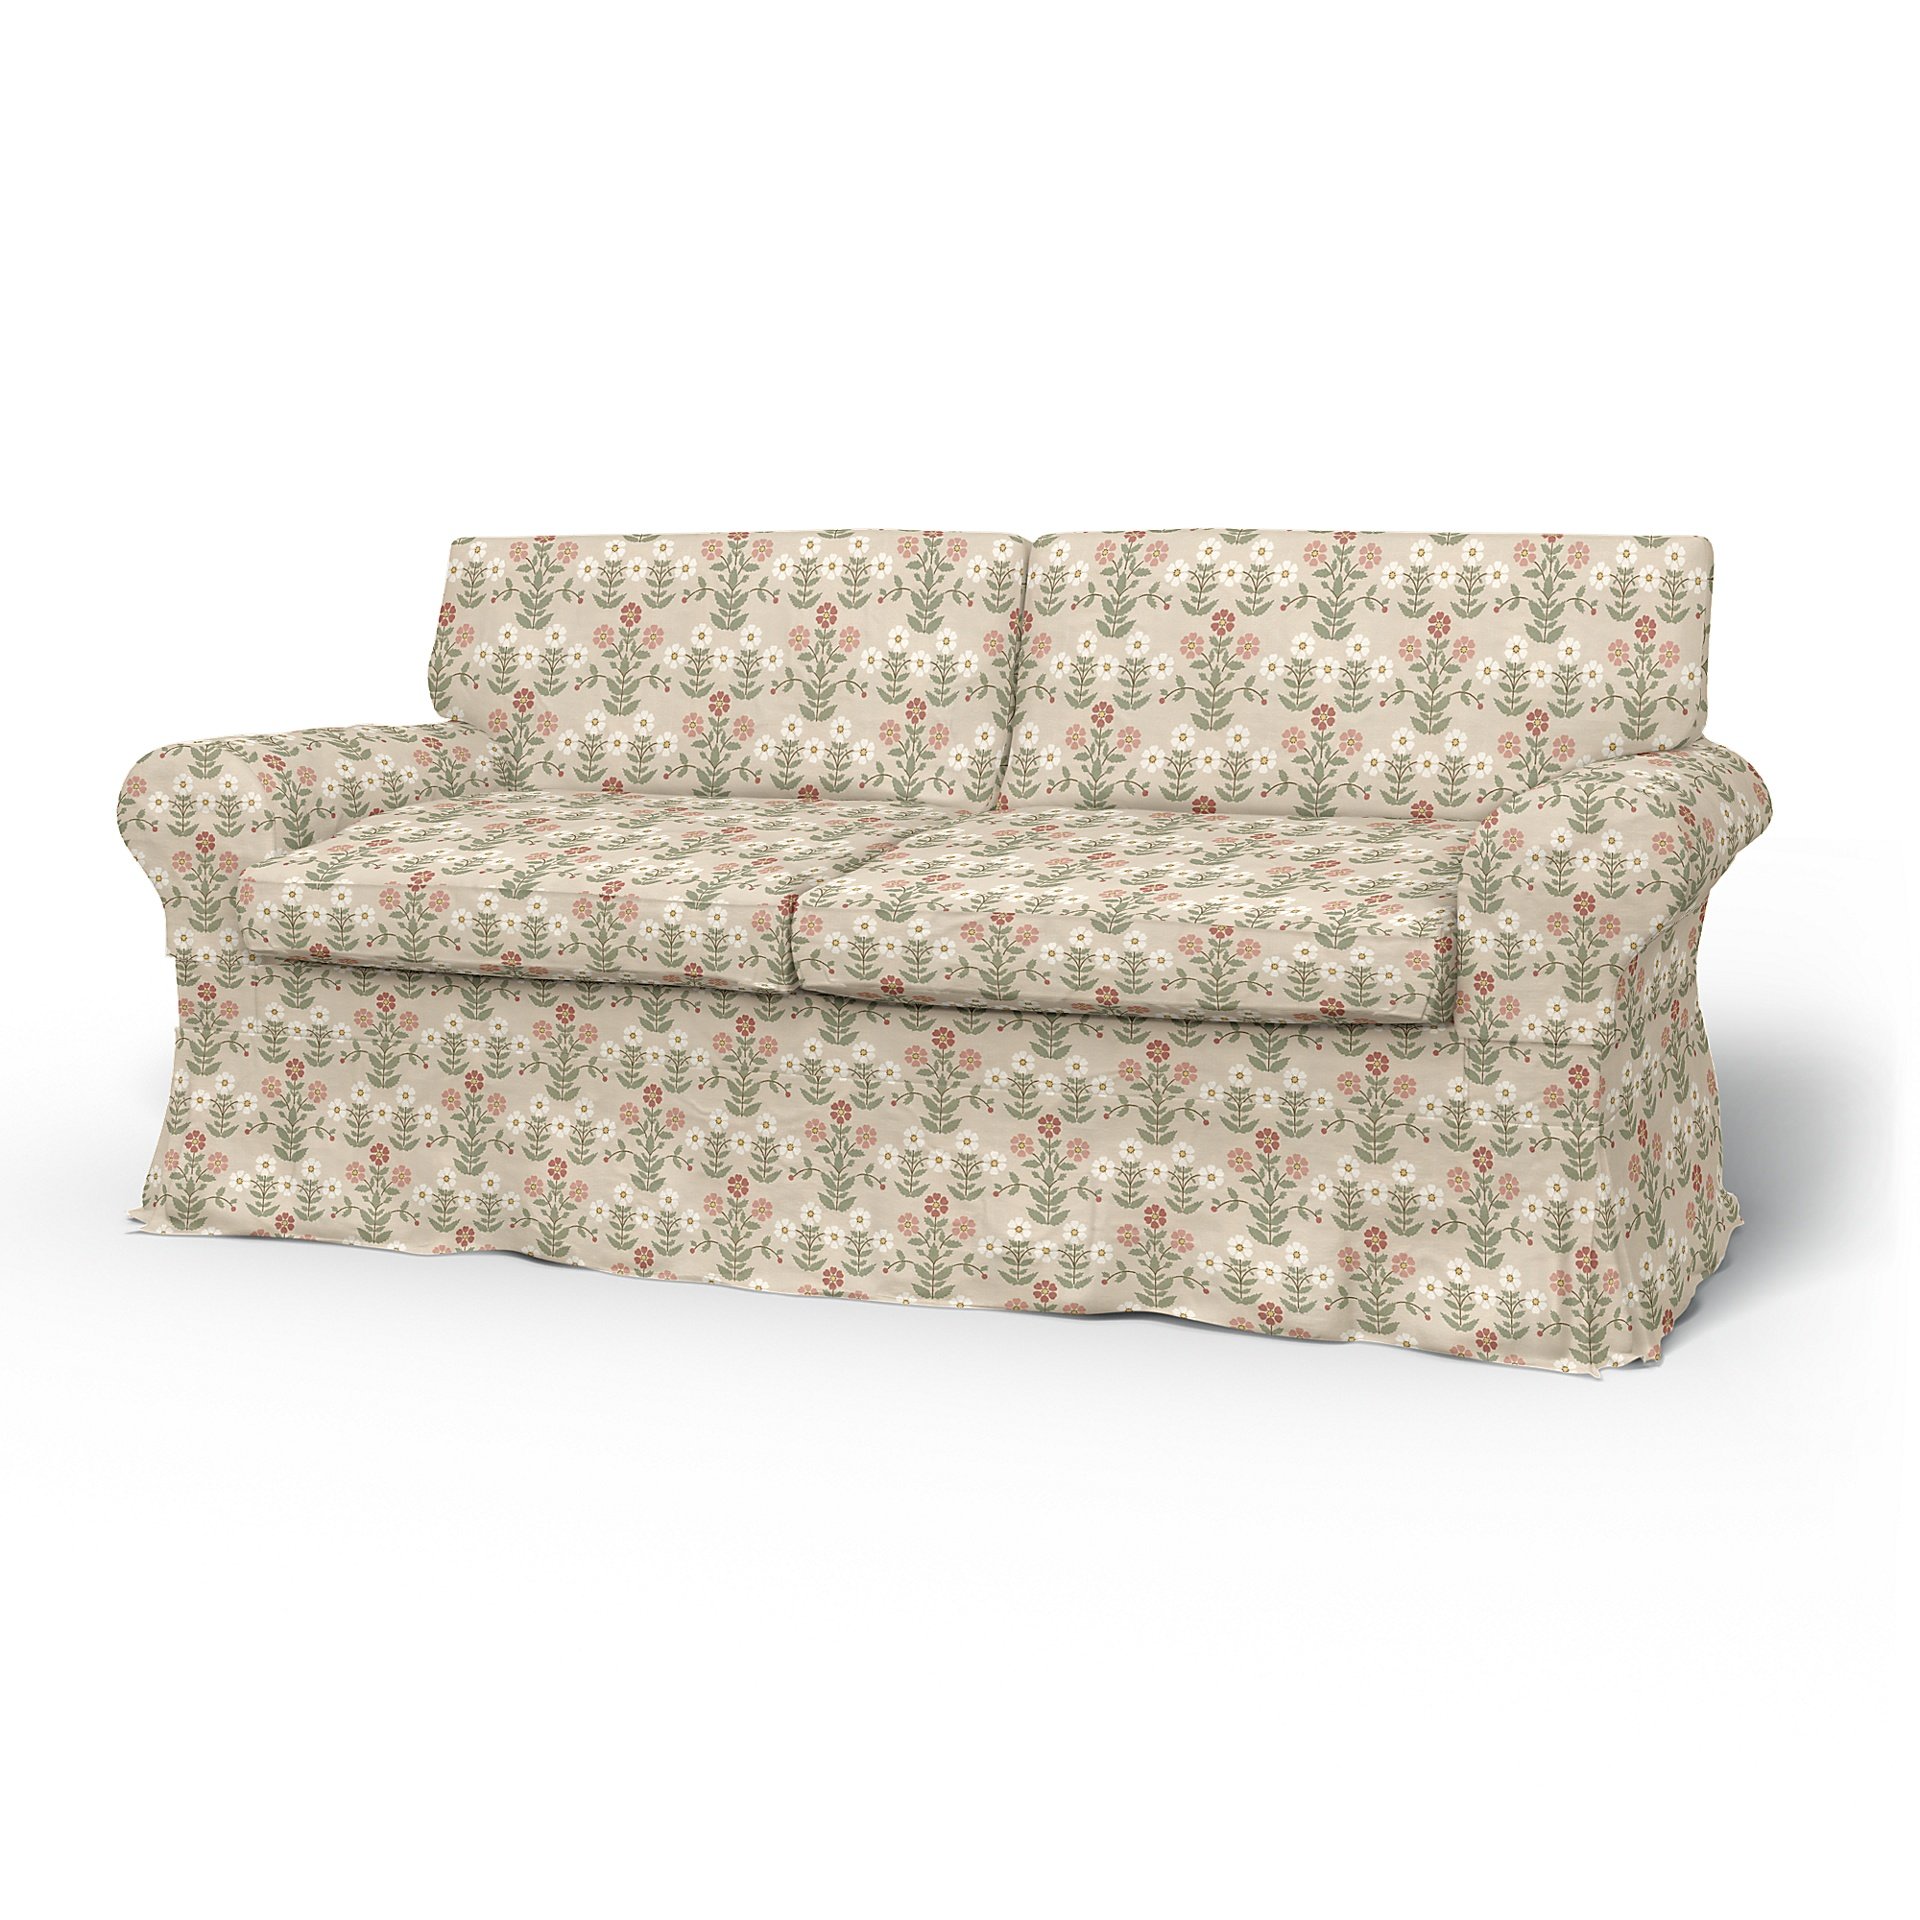 IKEA - Ektorp 2 Seater Sofa Bed Cover, Pink Sippor, BEMZ x BORASTAPETER COLLECTION - Bemz